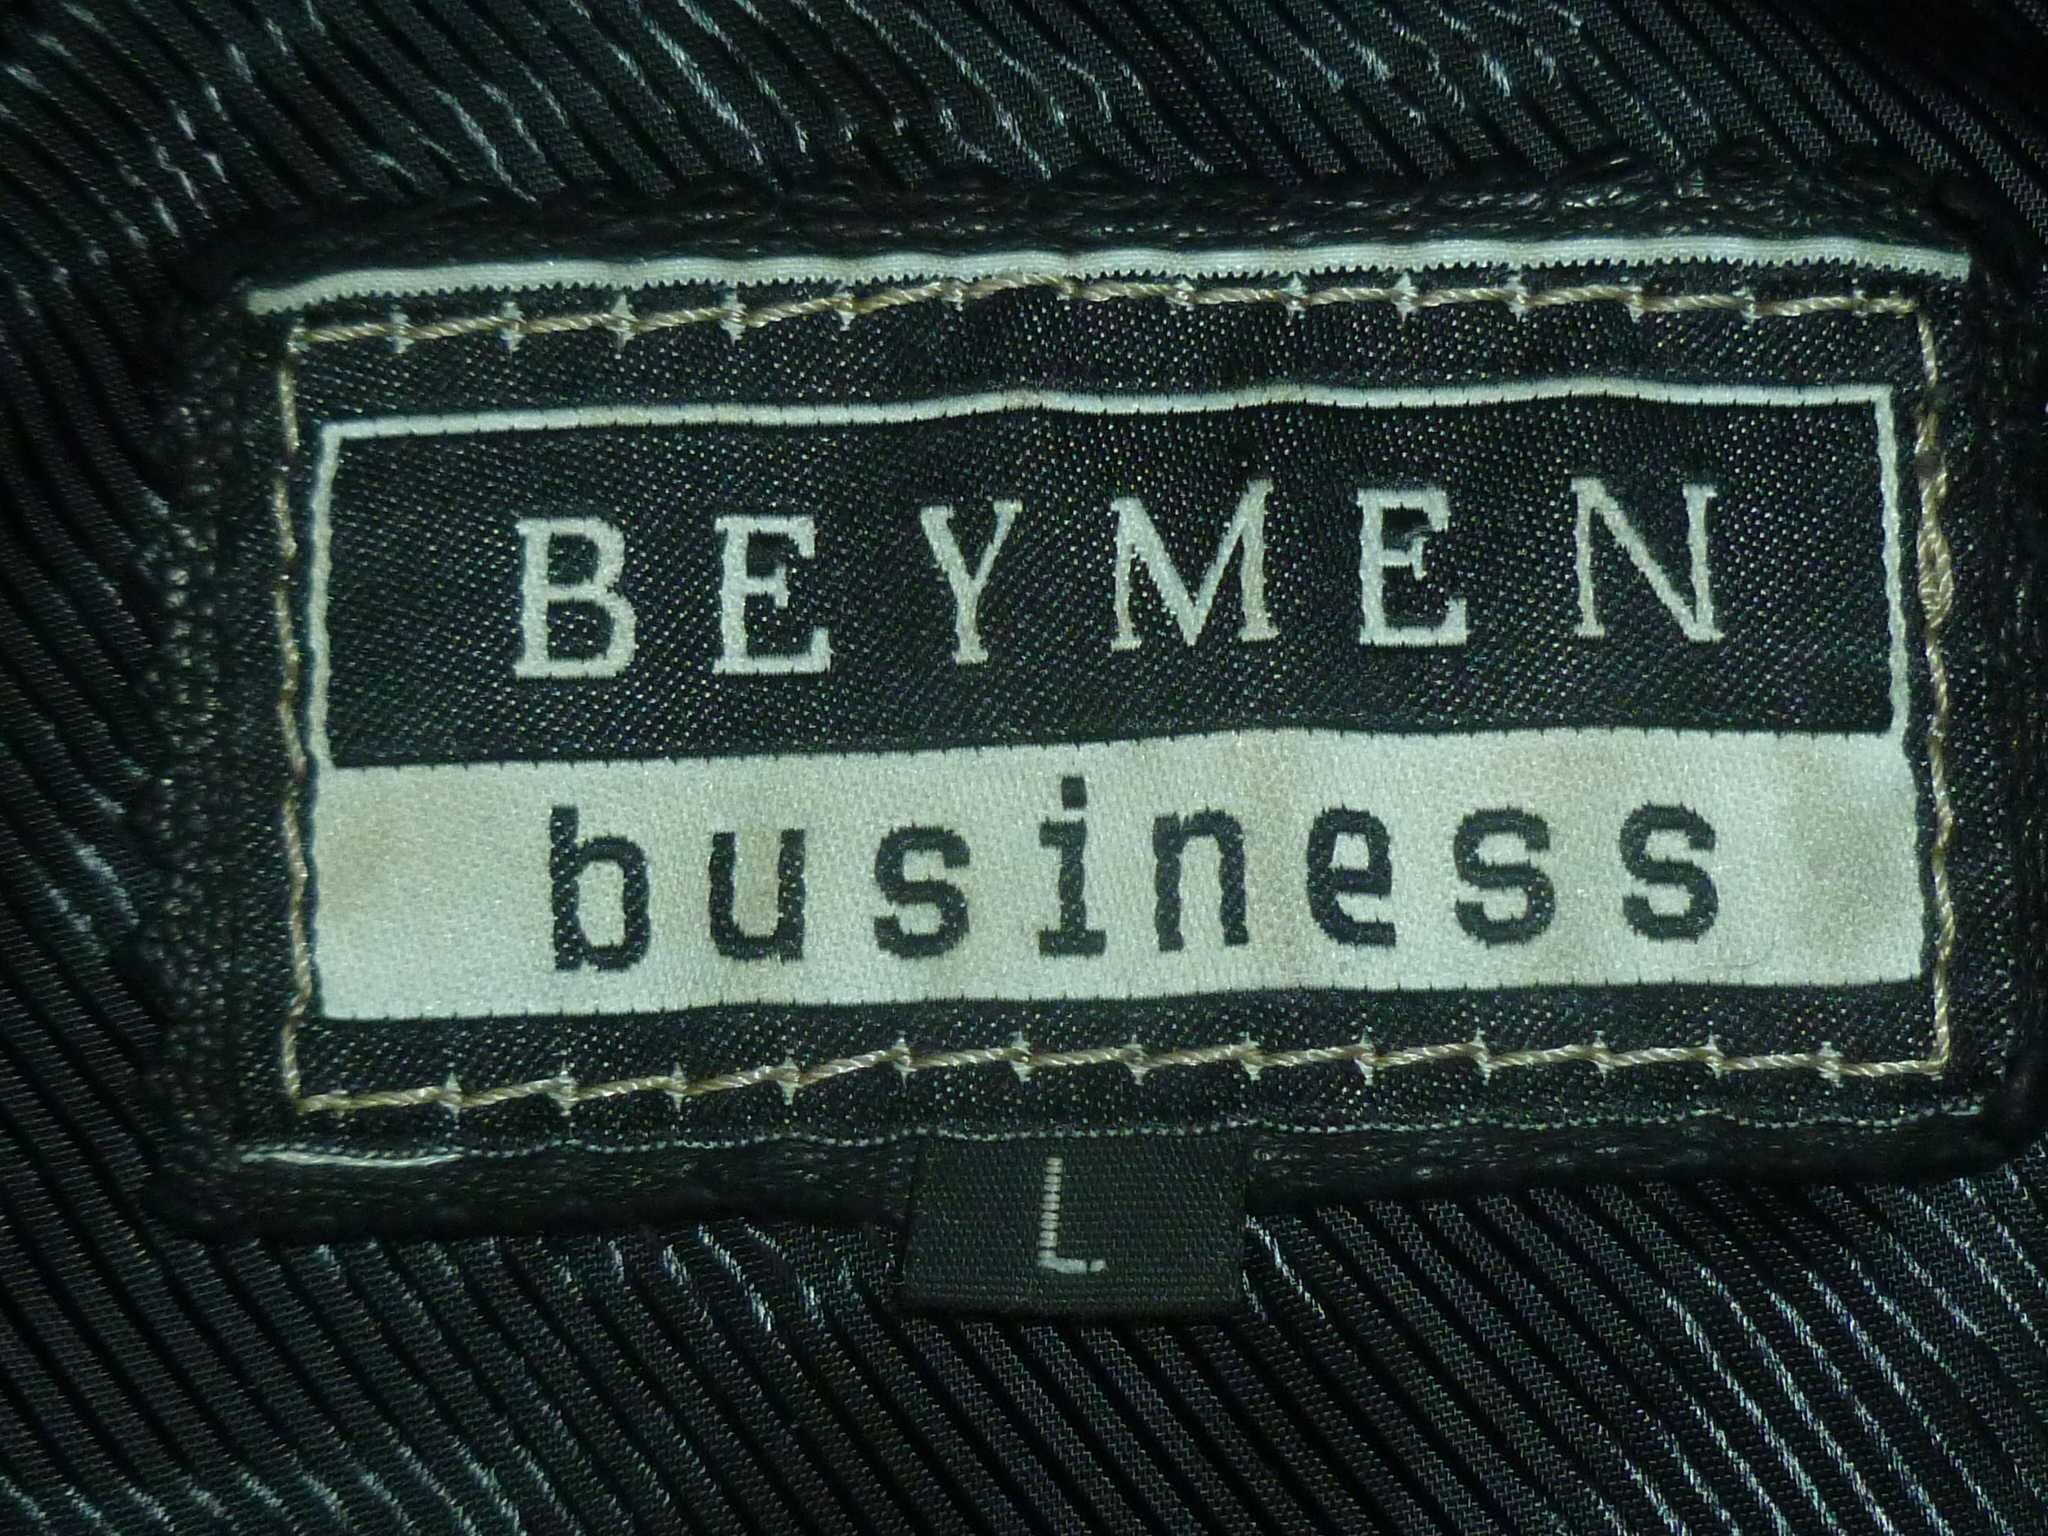 Кожаная куртка на юношу (46) Beymen Business, мотокуртка